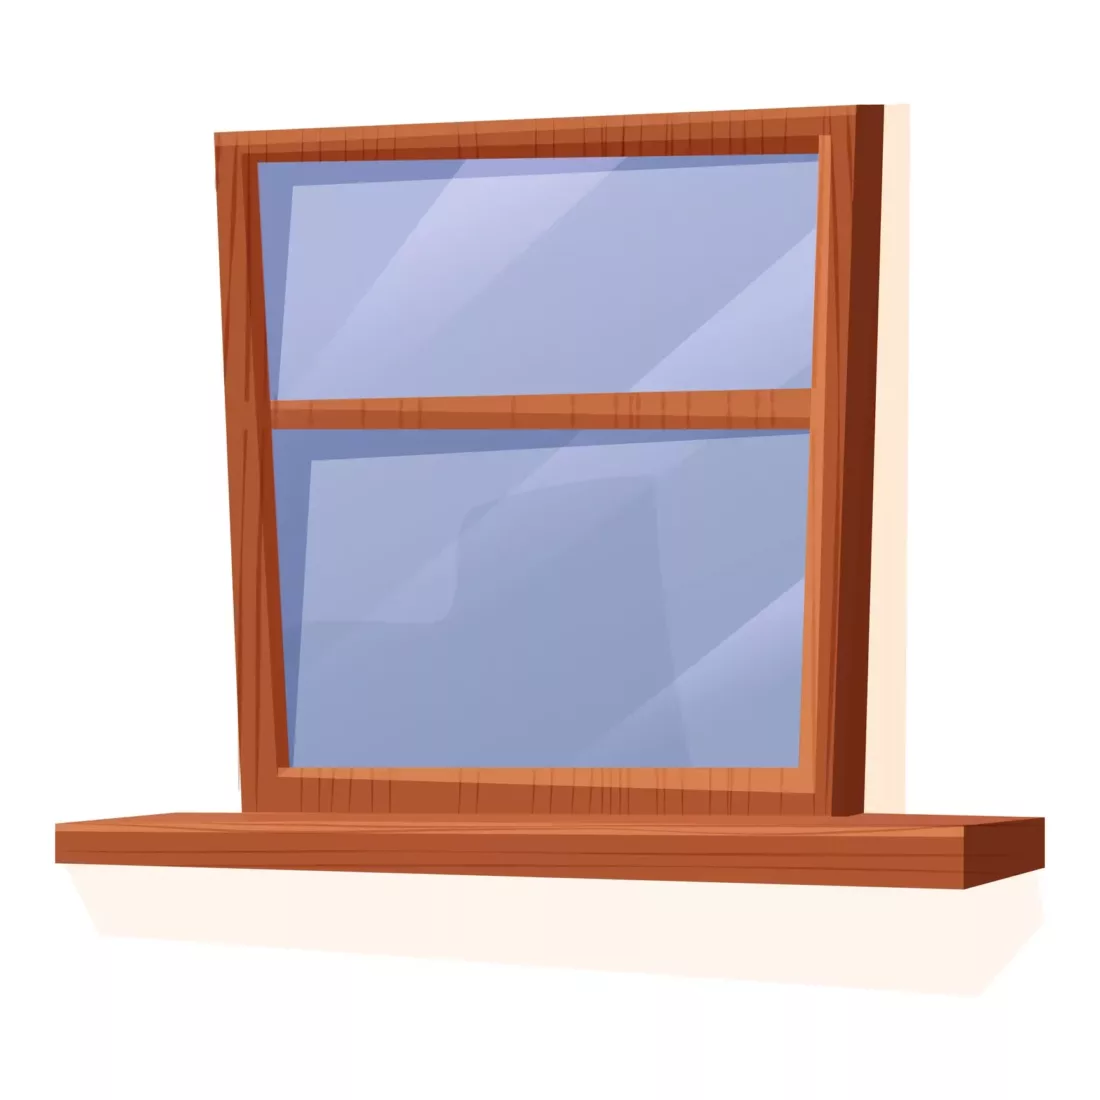 Wooden Sash Window